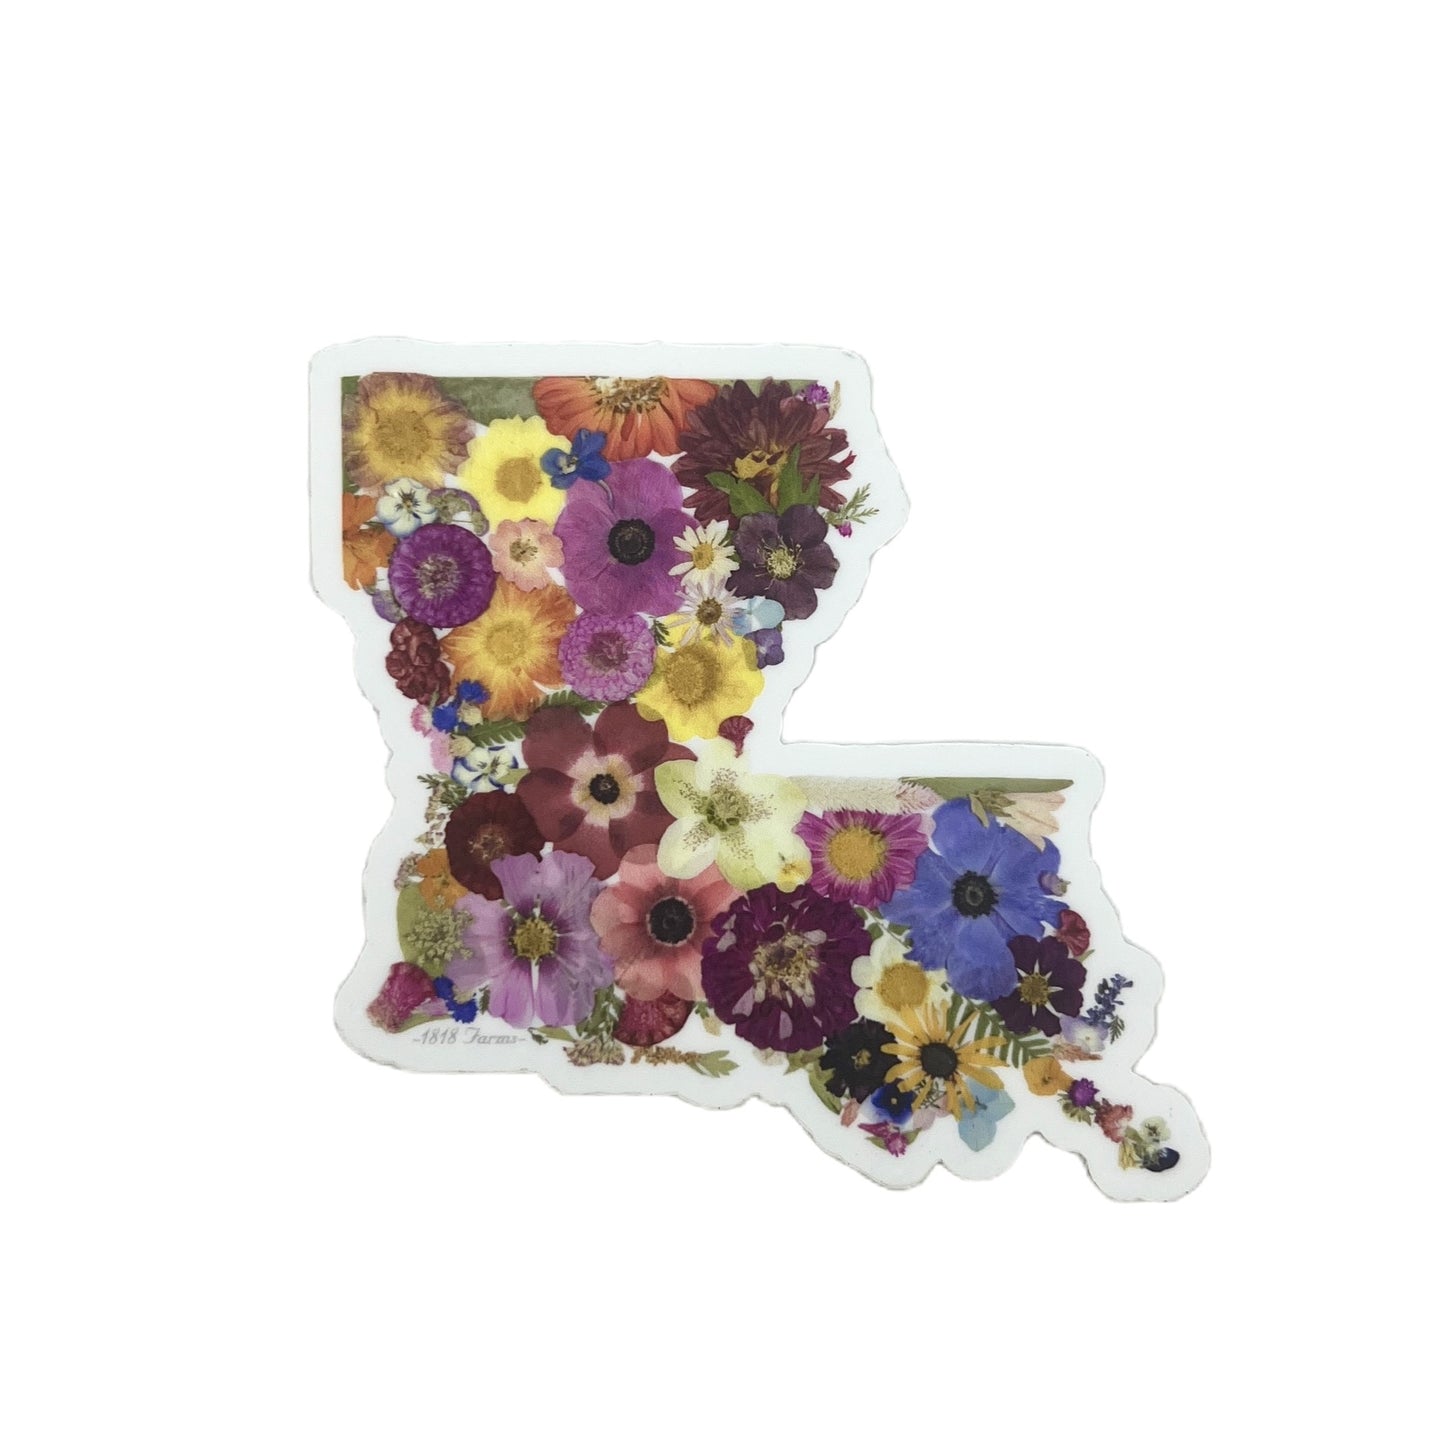 State Themed Vinyl Sticker  - "Where I Bloom" Collection Vinyl Sticker 1818 Farms Louisiana  